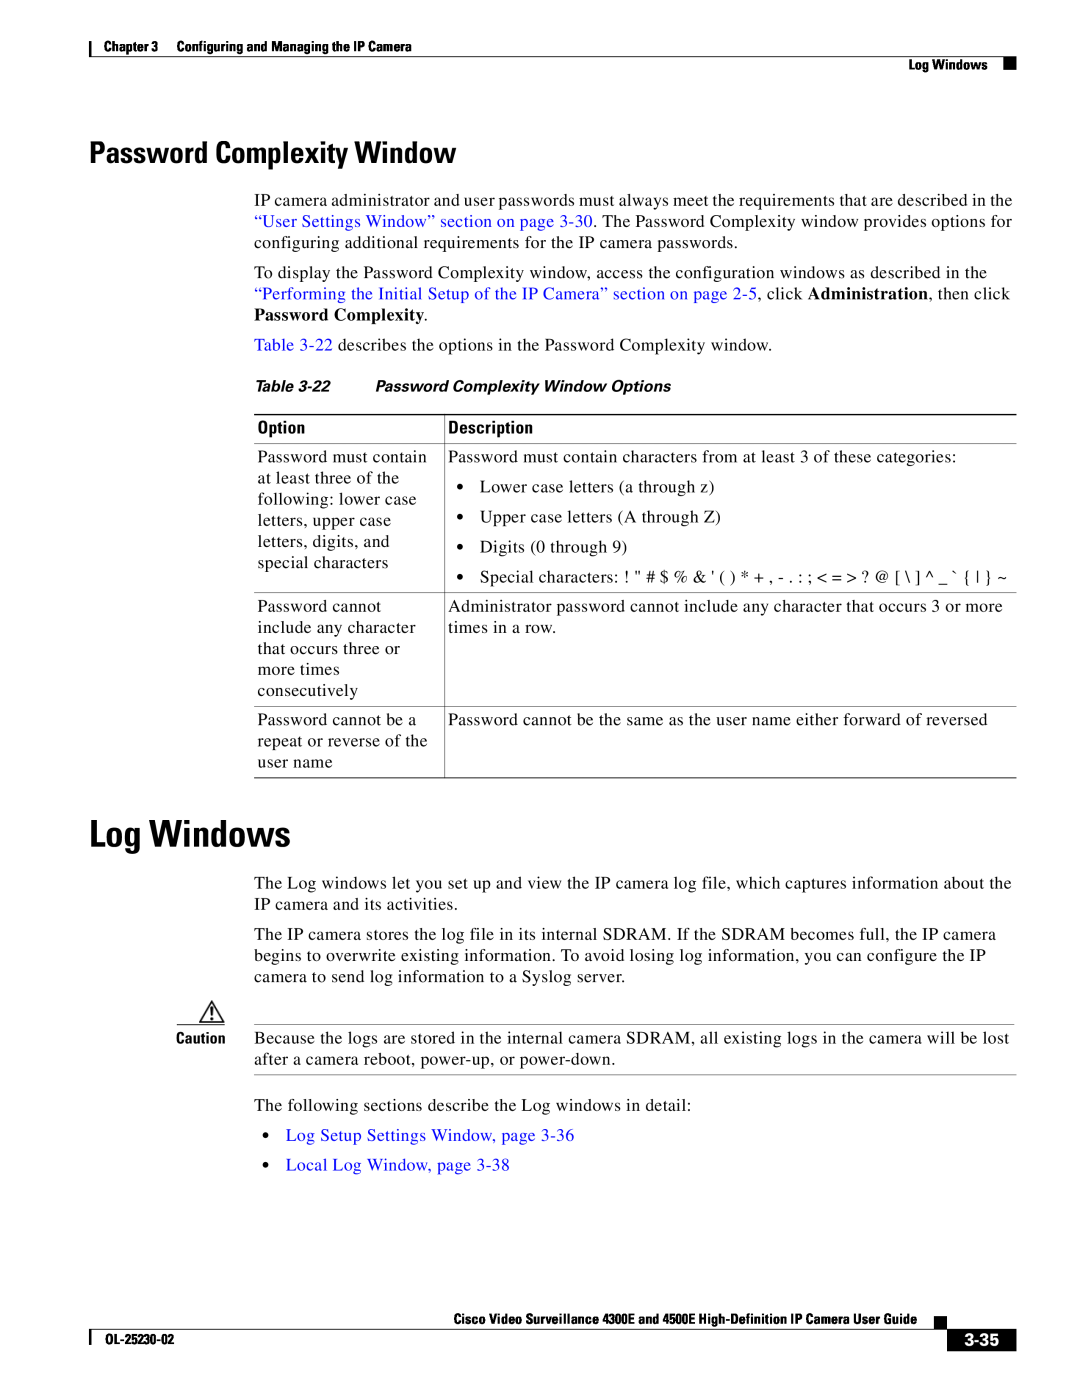 Cisco Systems 4500E Log Windows, Password Complexity Window, Log Setup Settings Window, page, •Local Log Window, page 